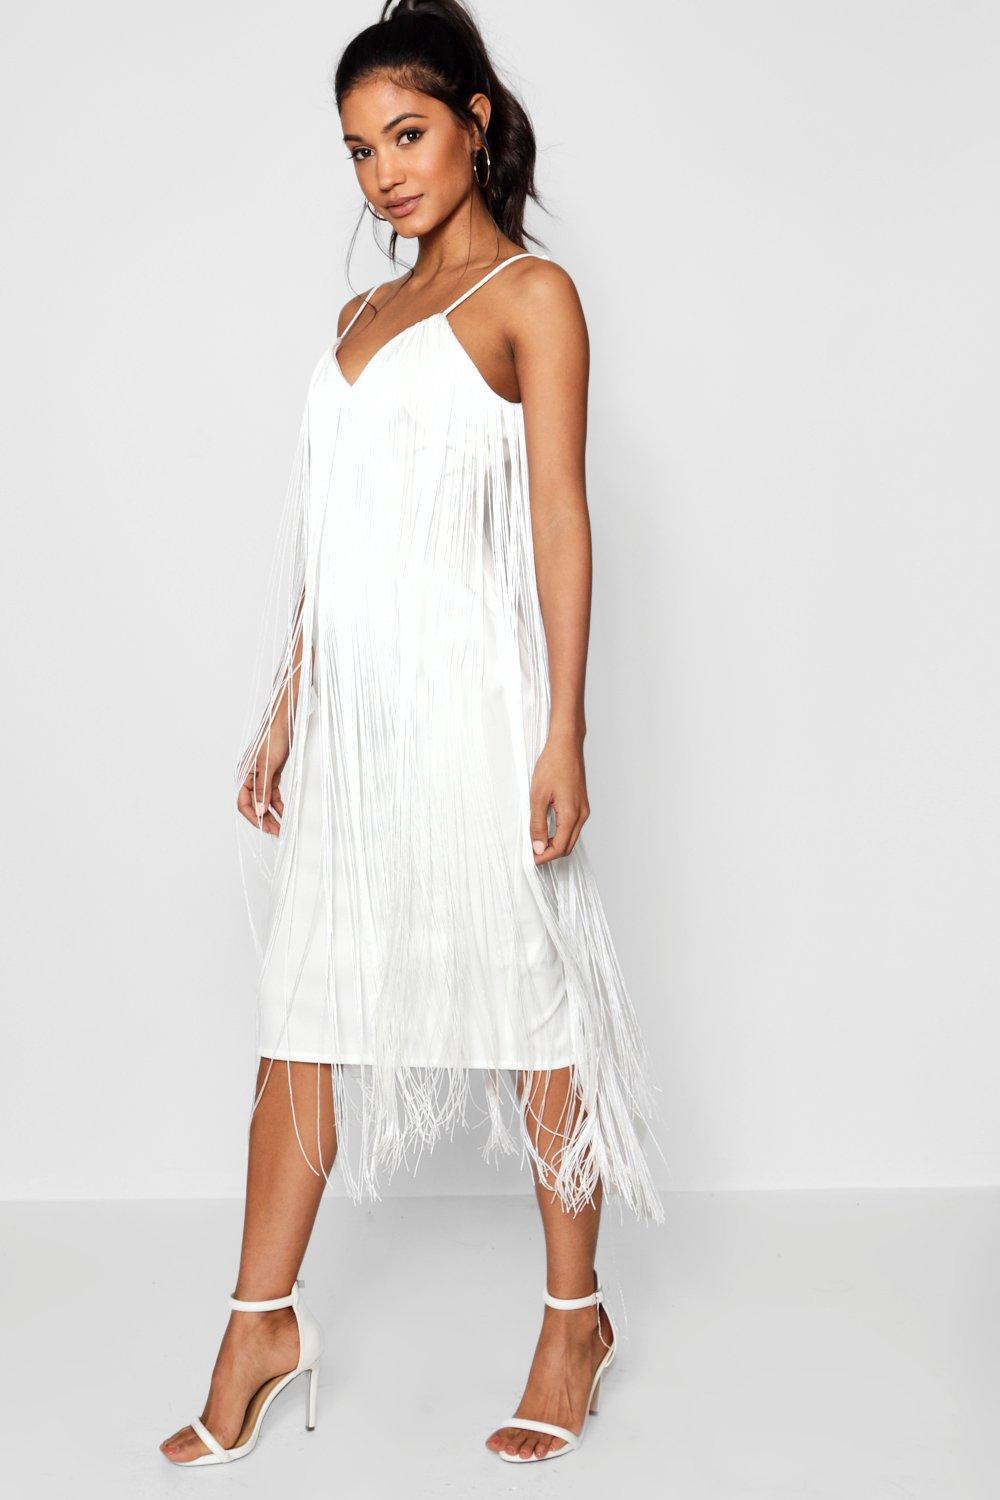 Boohoo Synthetic Tassel Midi Dress in White - Lyst